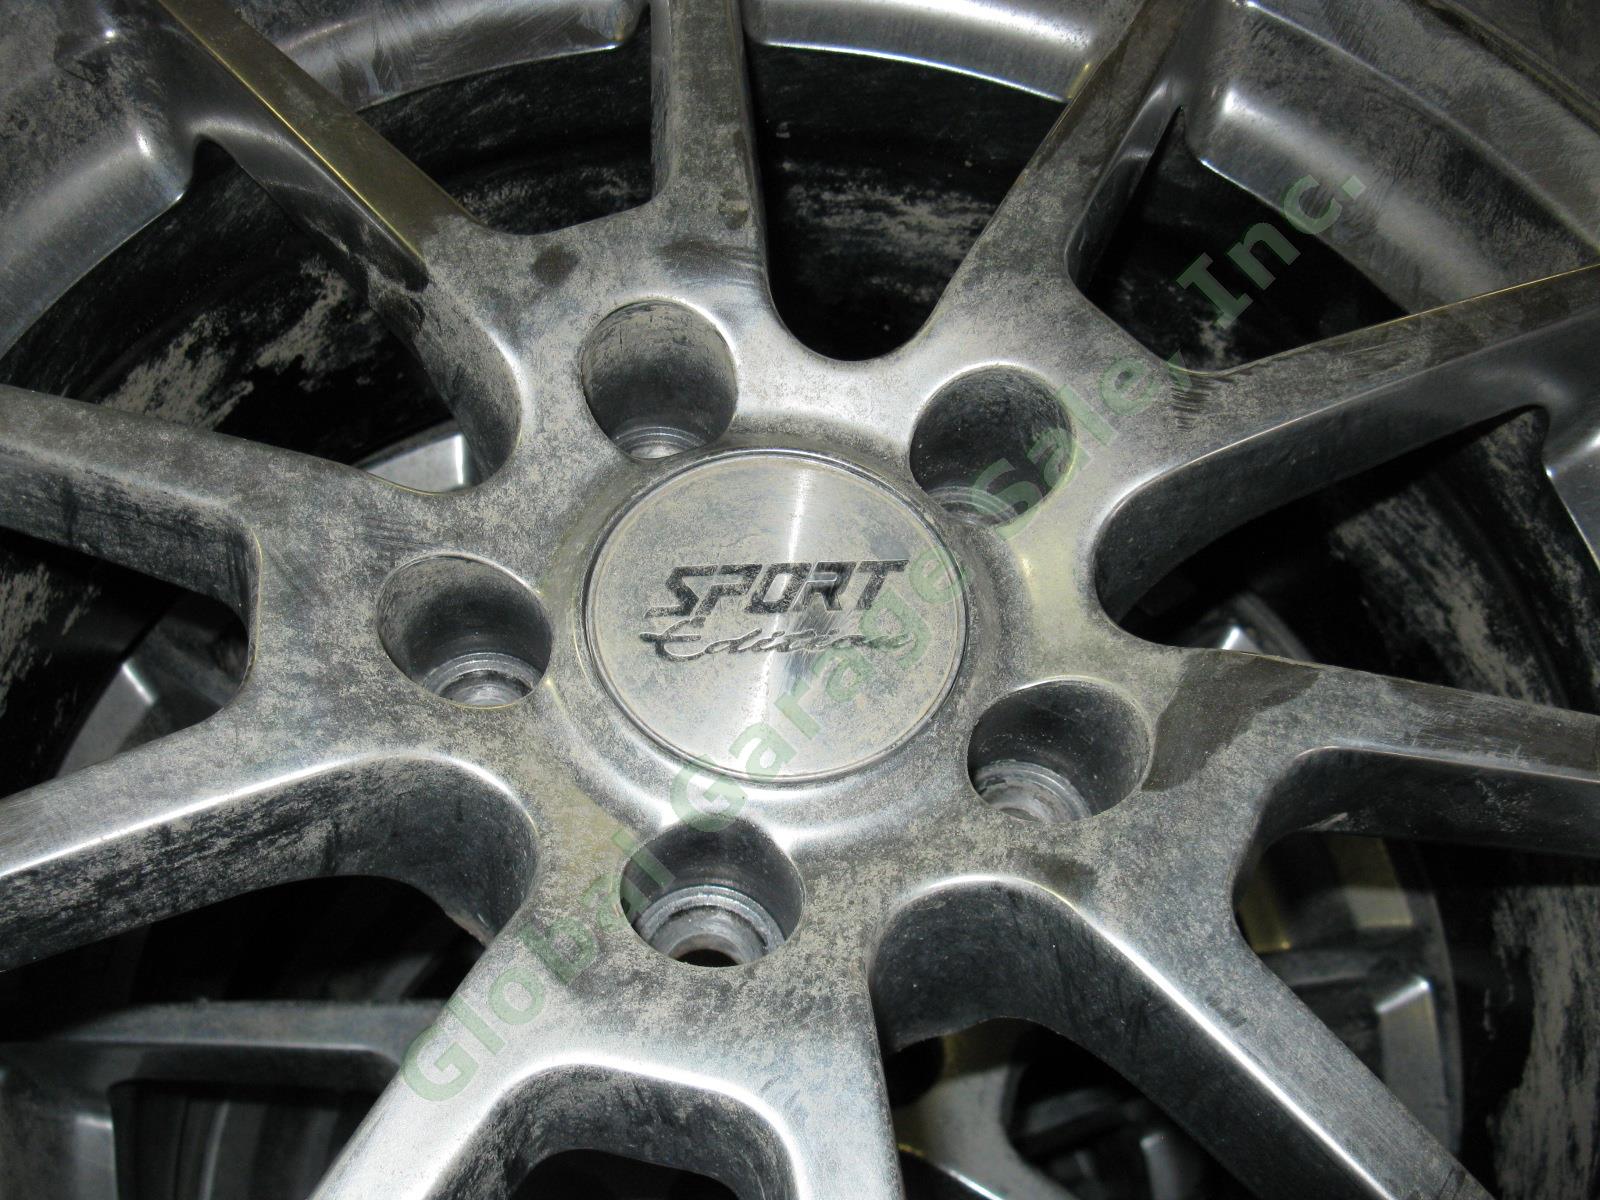 4 Bridgestone Blizzak WS80 235/55R17 Winter Snow Tires On 17" Sport Edition Rims 5